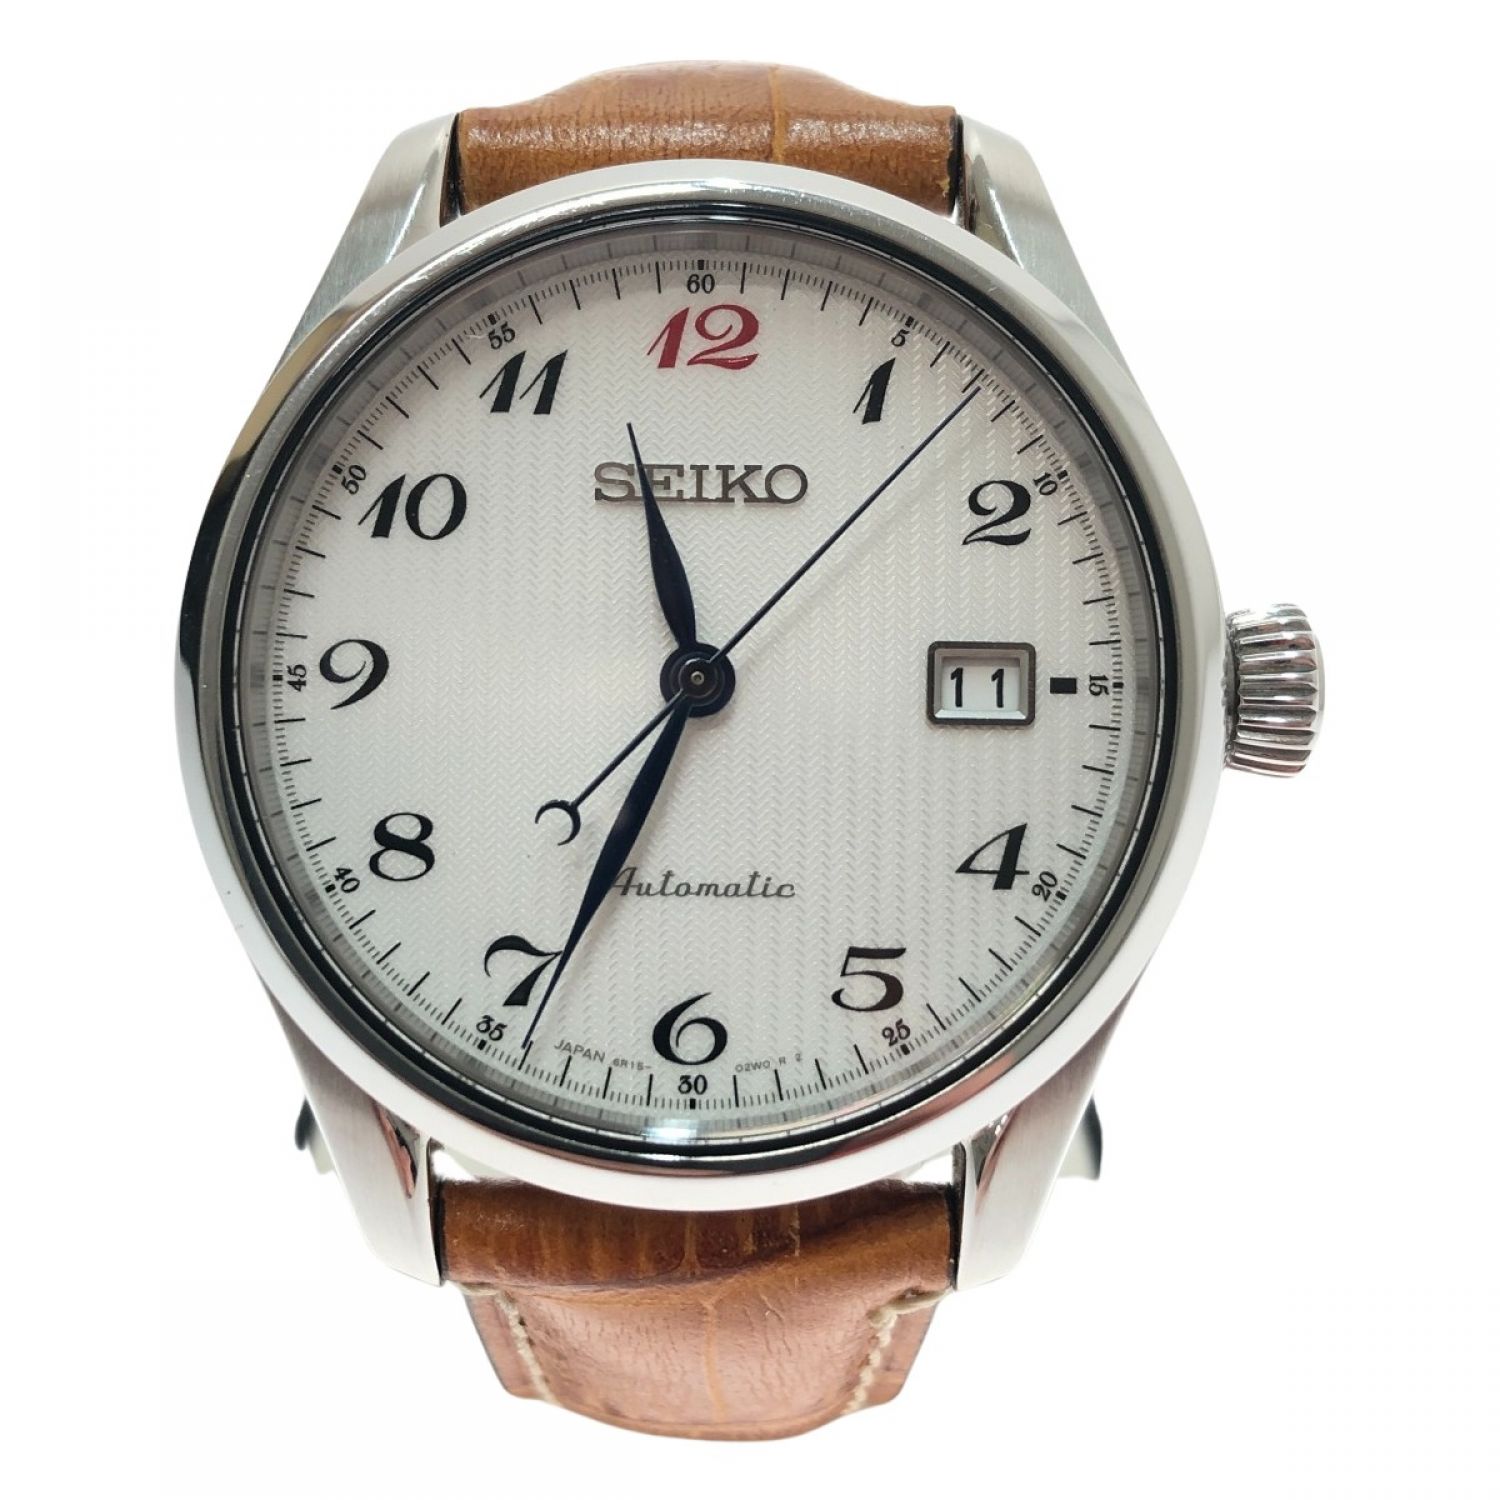 SEIKO 腕時計6R15 - 腕時計(アナログ)